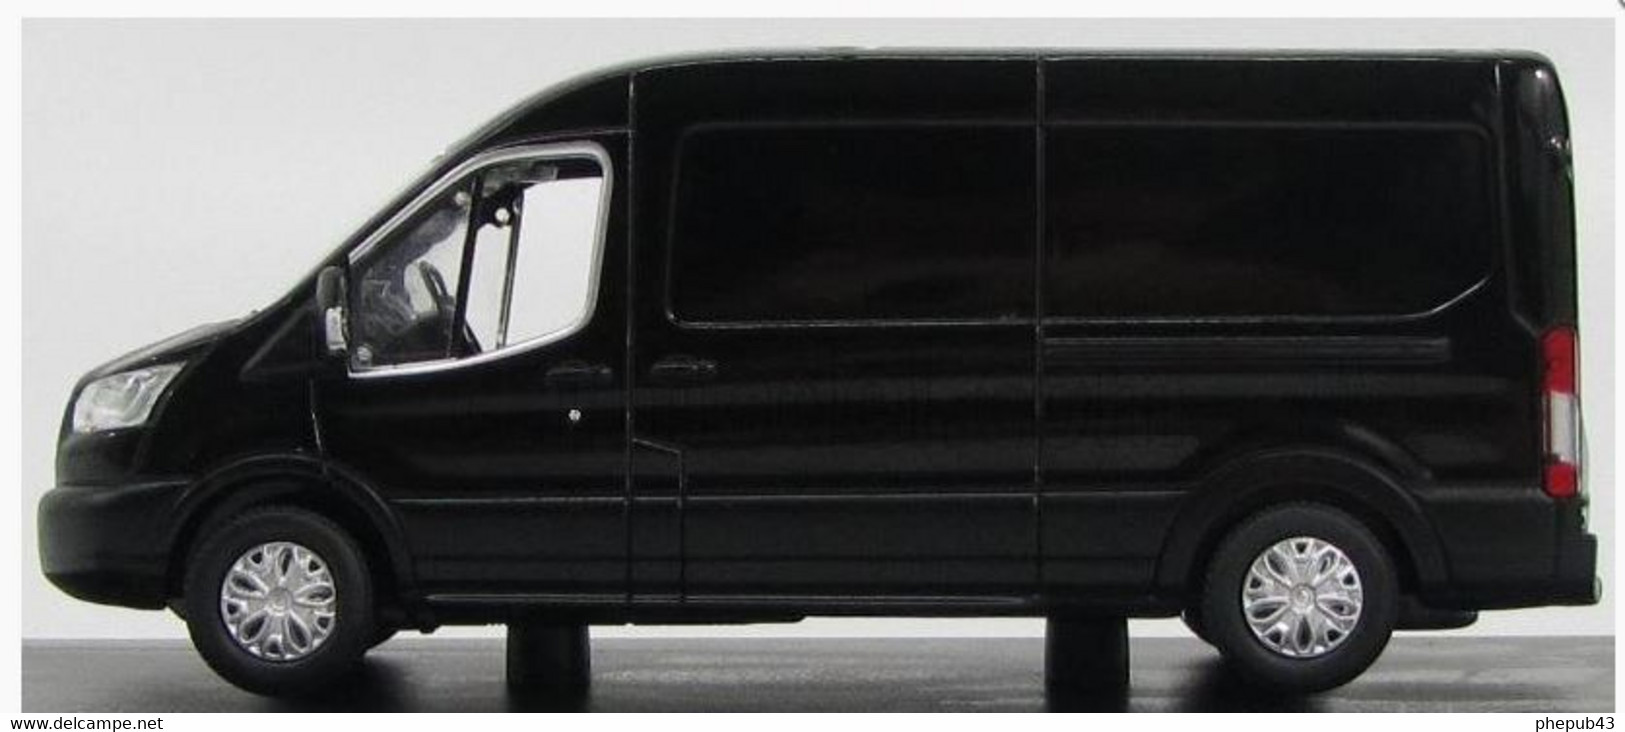 Ford Transit Van - 2015 - Black - Greenlight - Utilitarios